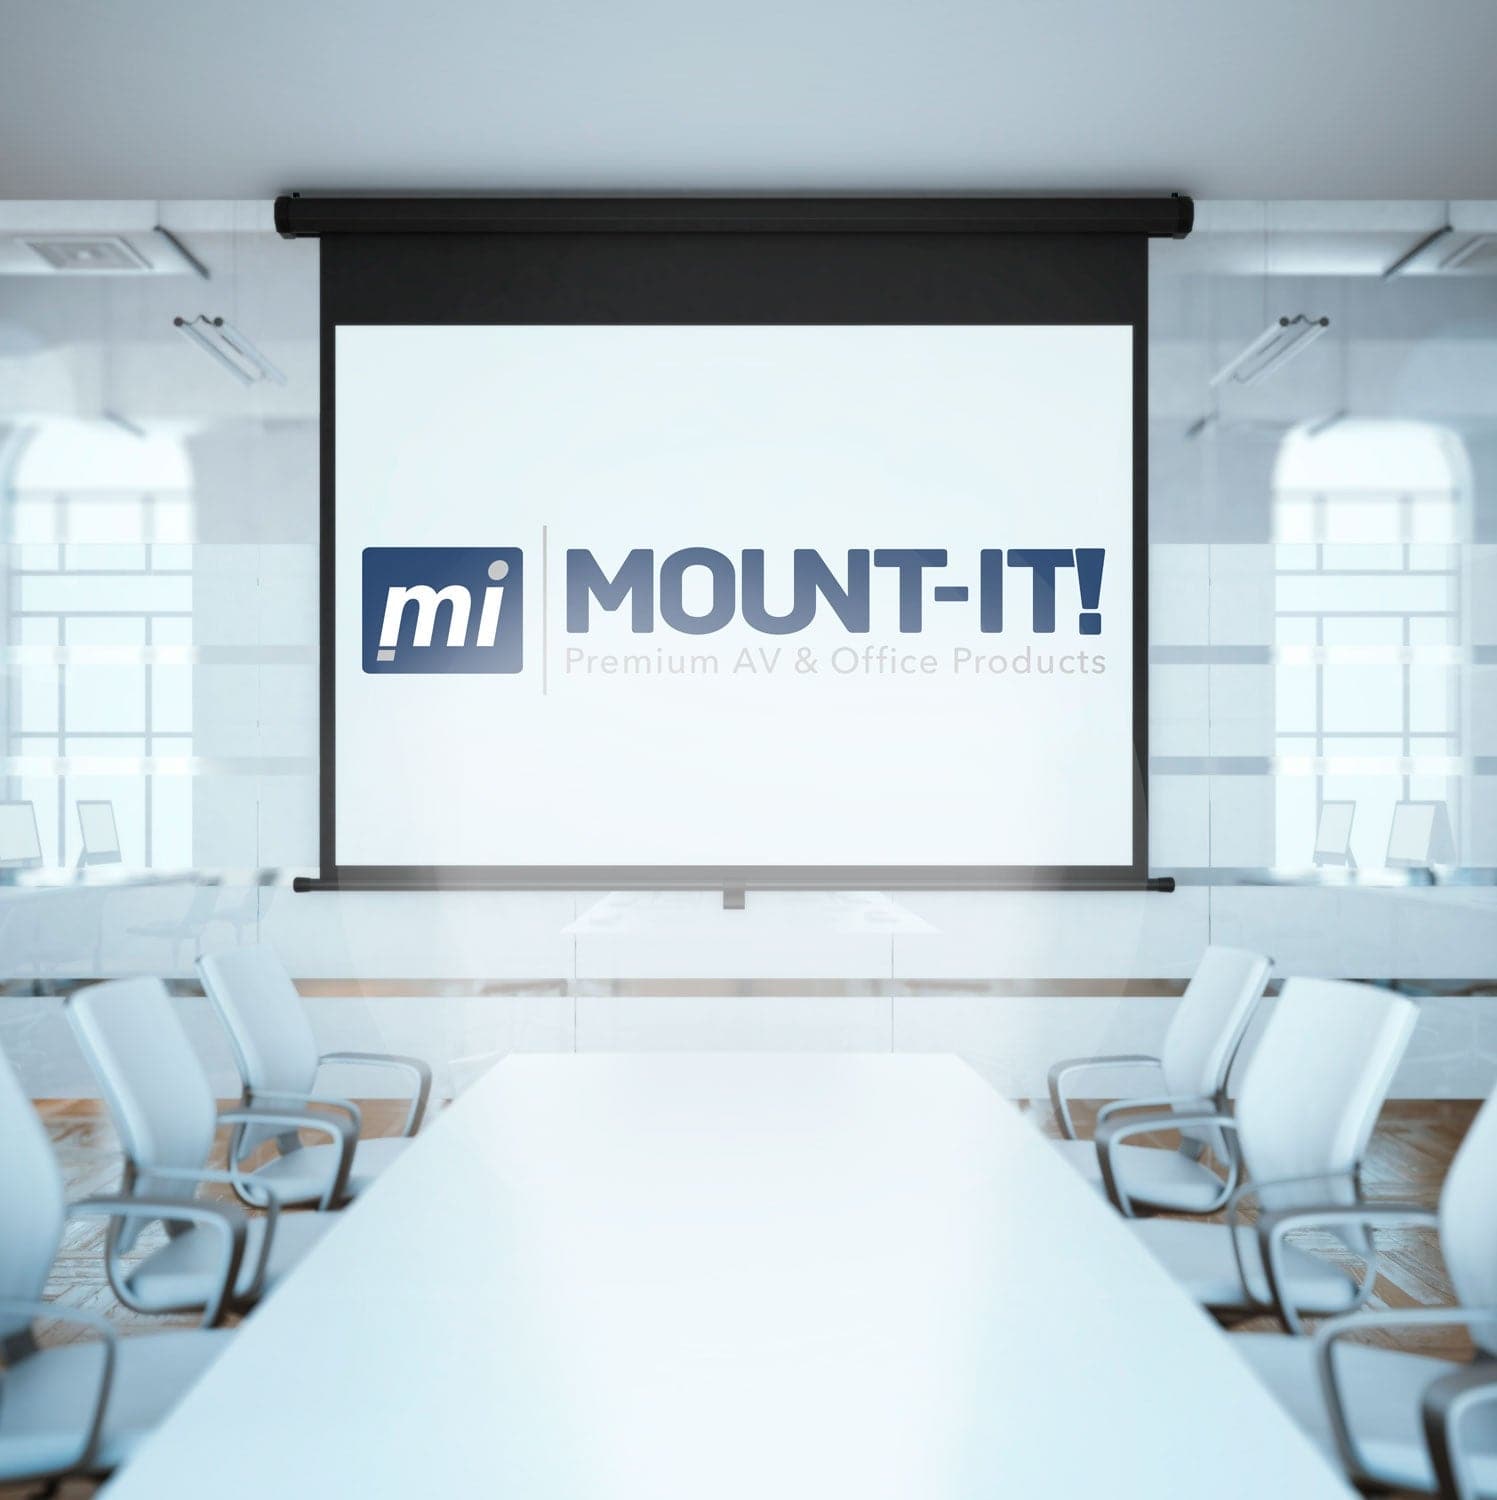 Universal Projector Screen Wall Mount - Mount-It!